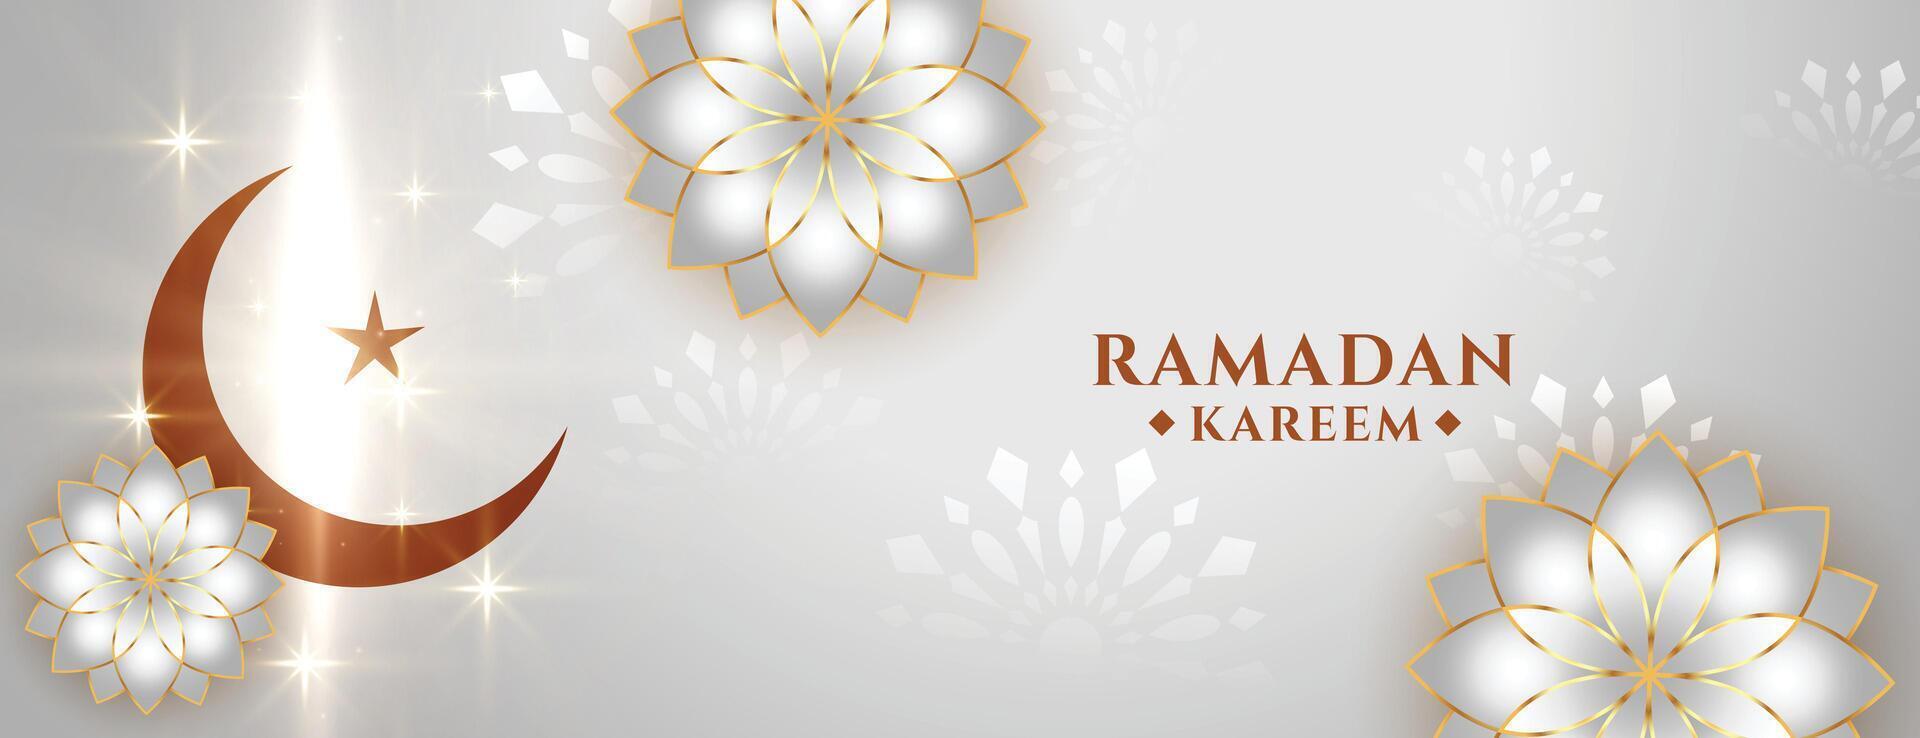 brilhante Ramadã kareem árabe estilo decorativo bandeira Projeto vetor